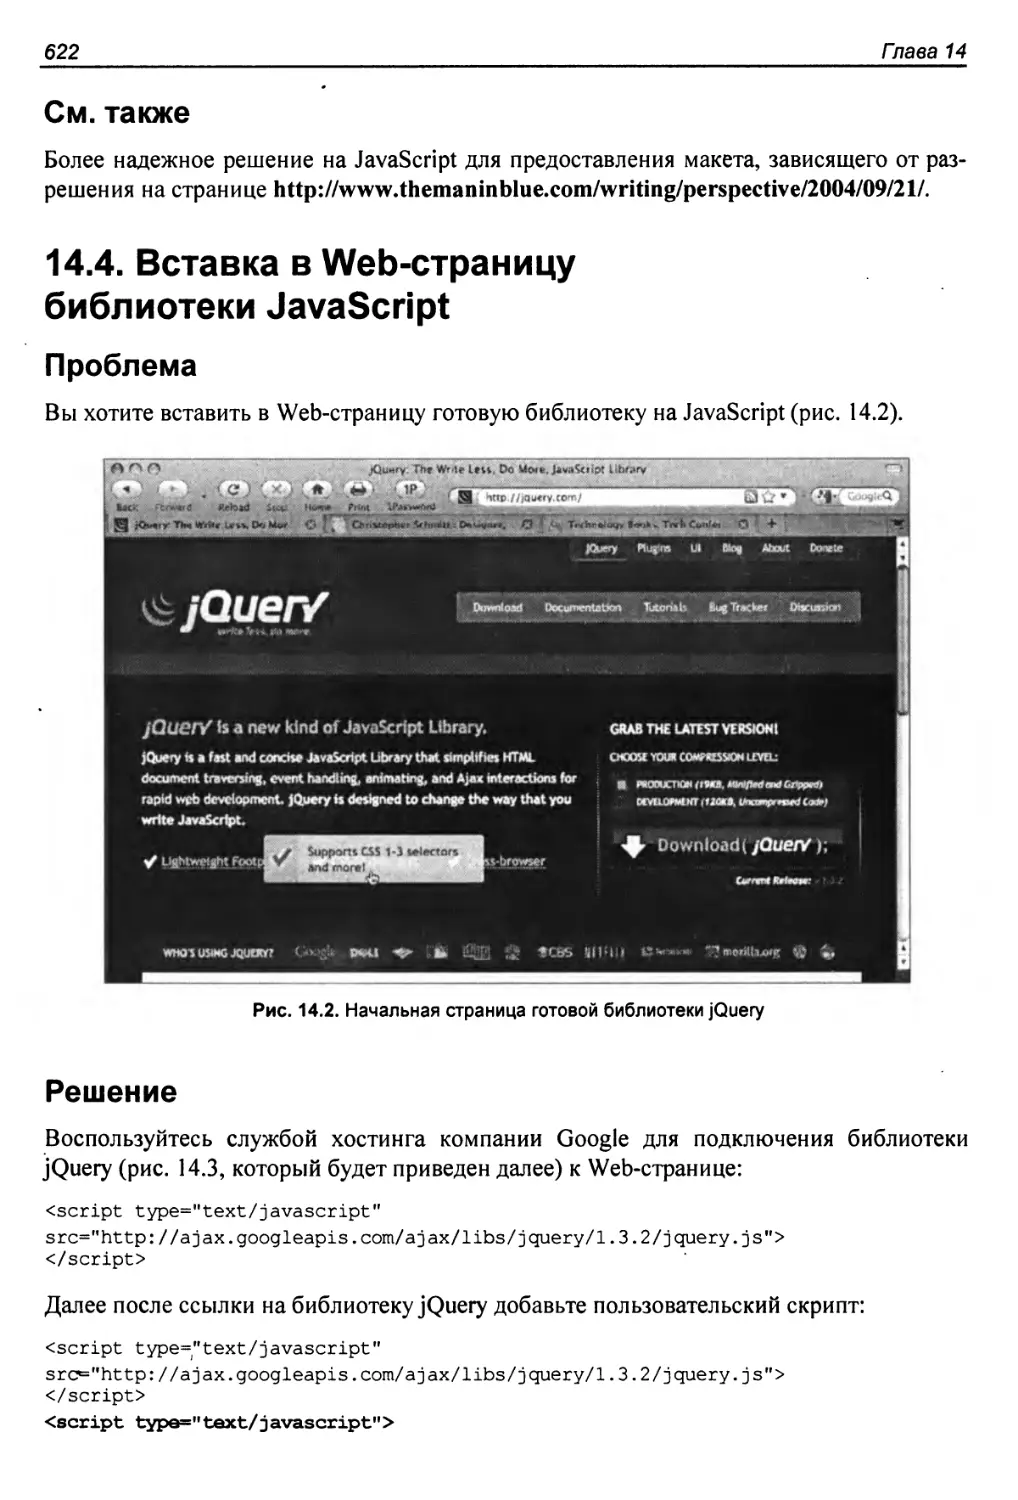 14.4. Вставка в Web-страницу библиотеки JavaScript